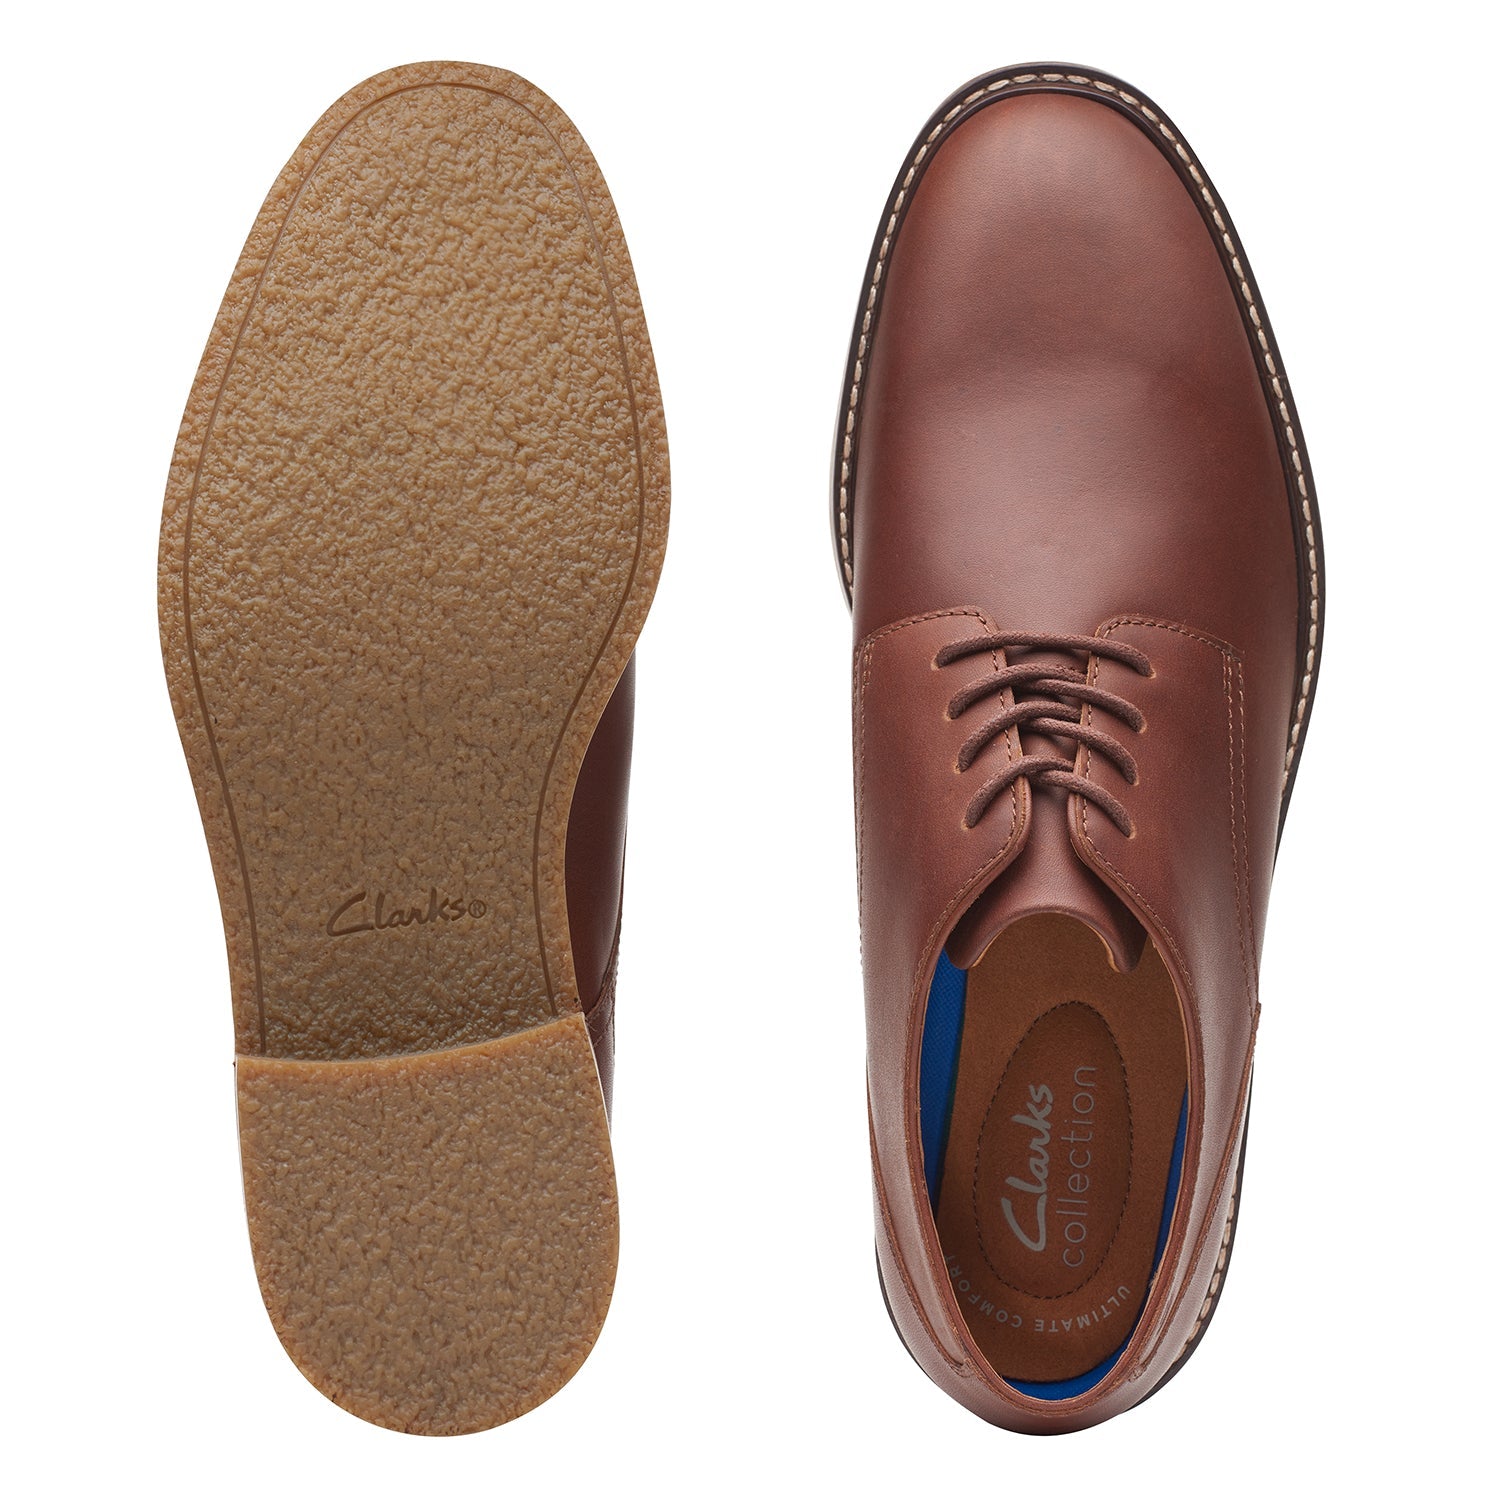 Clarks Jaxen Low Shoes - Tan Leather - 261651847 - G Width (Standard Fit)